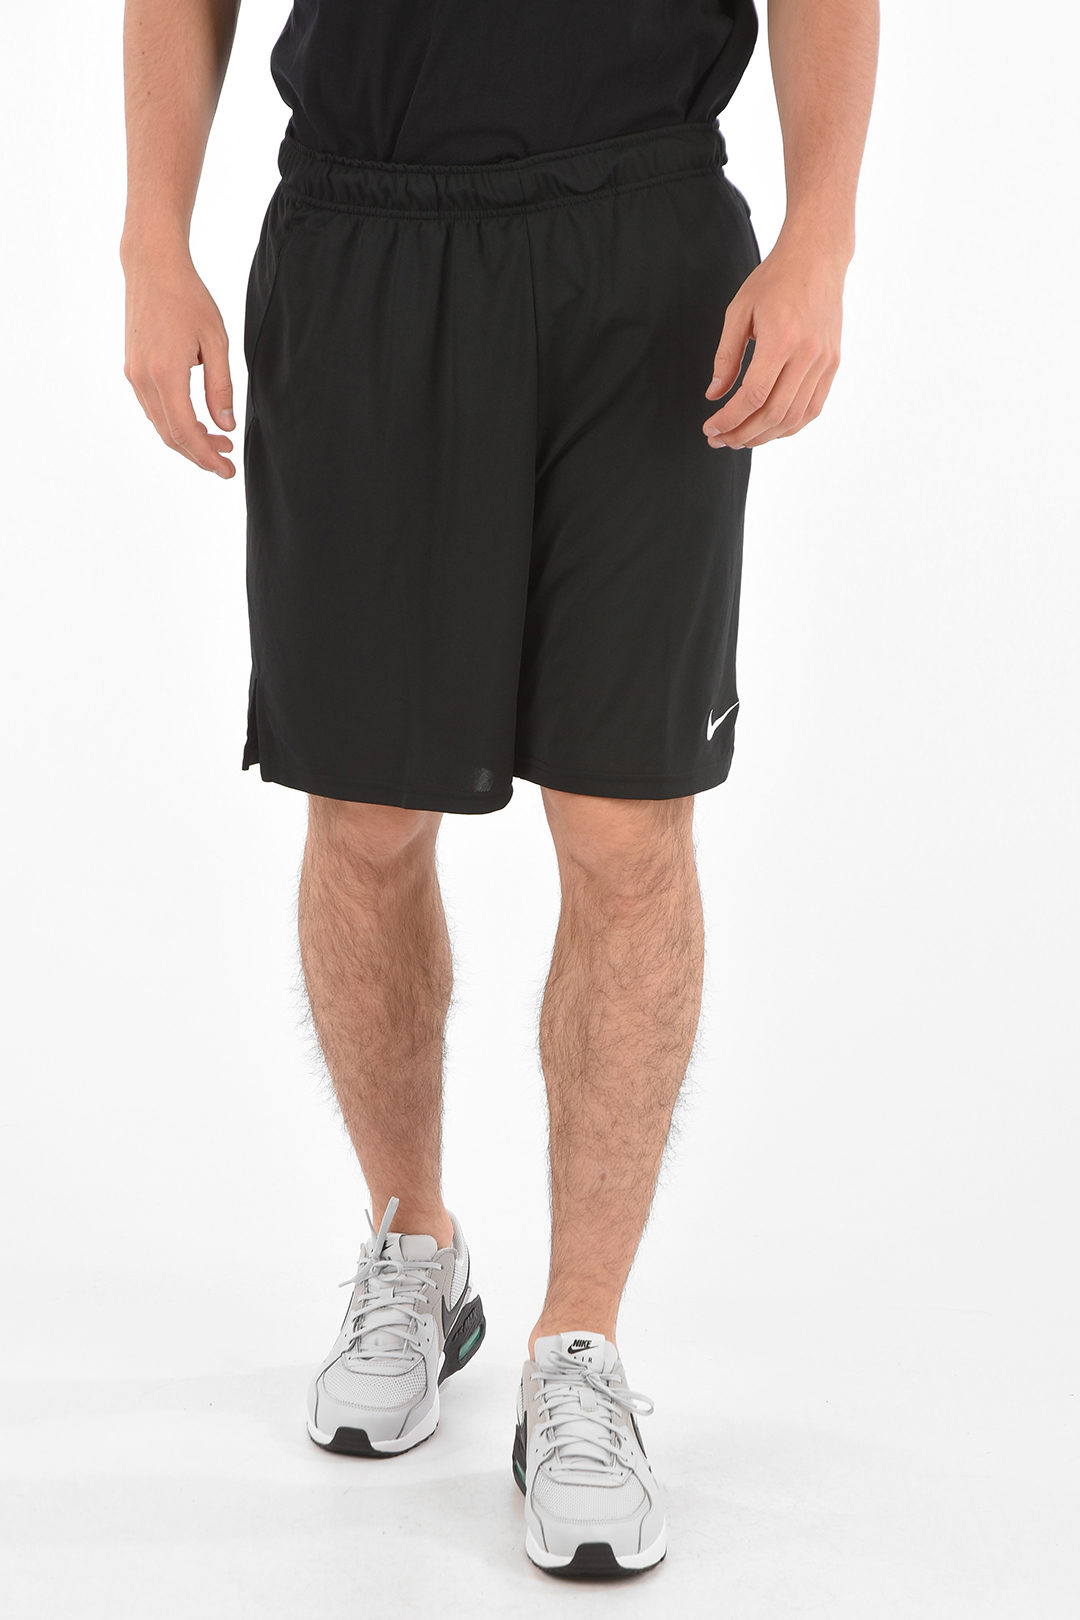 Nike solid DRI-FIT Shorts men -